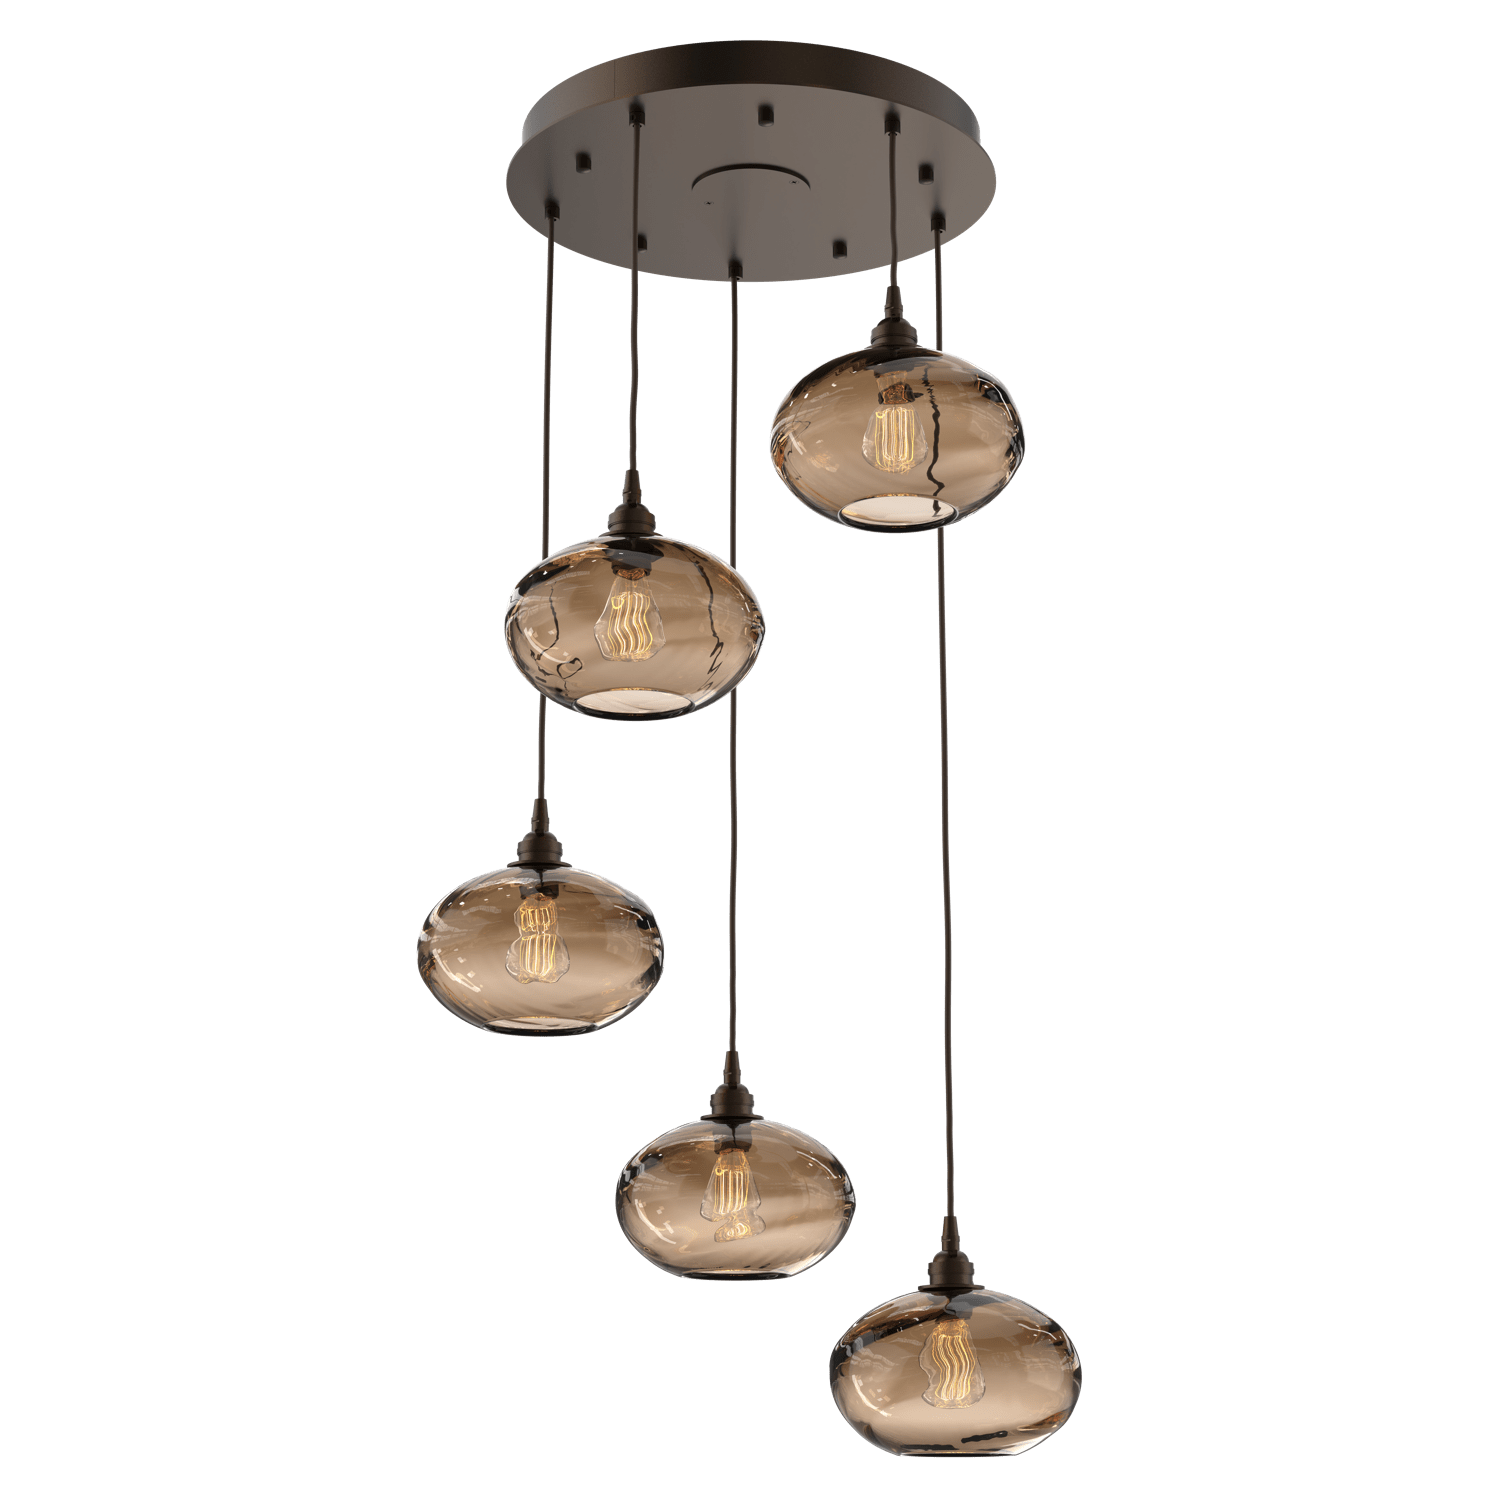 CHB0036-05-FB-OB-Hammerton-Studio-Optic-Blown-Glass-Coppa-5-light-round-pendant-chandelier-with-flat-bronze-finish-and-optic-bronze-blown-glass-shades-and-incandescent-lamping